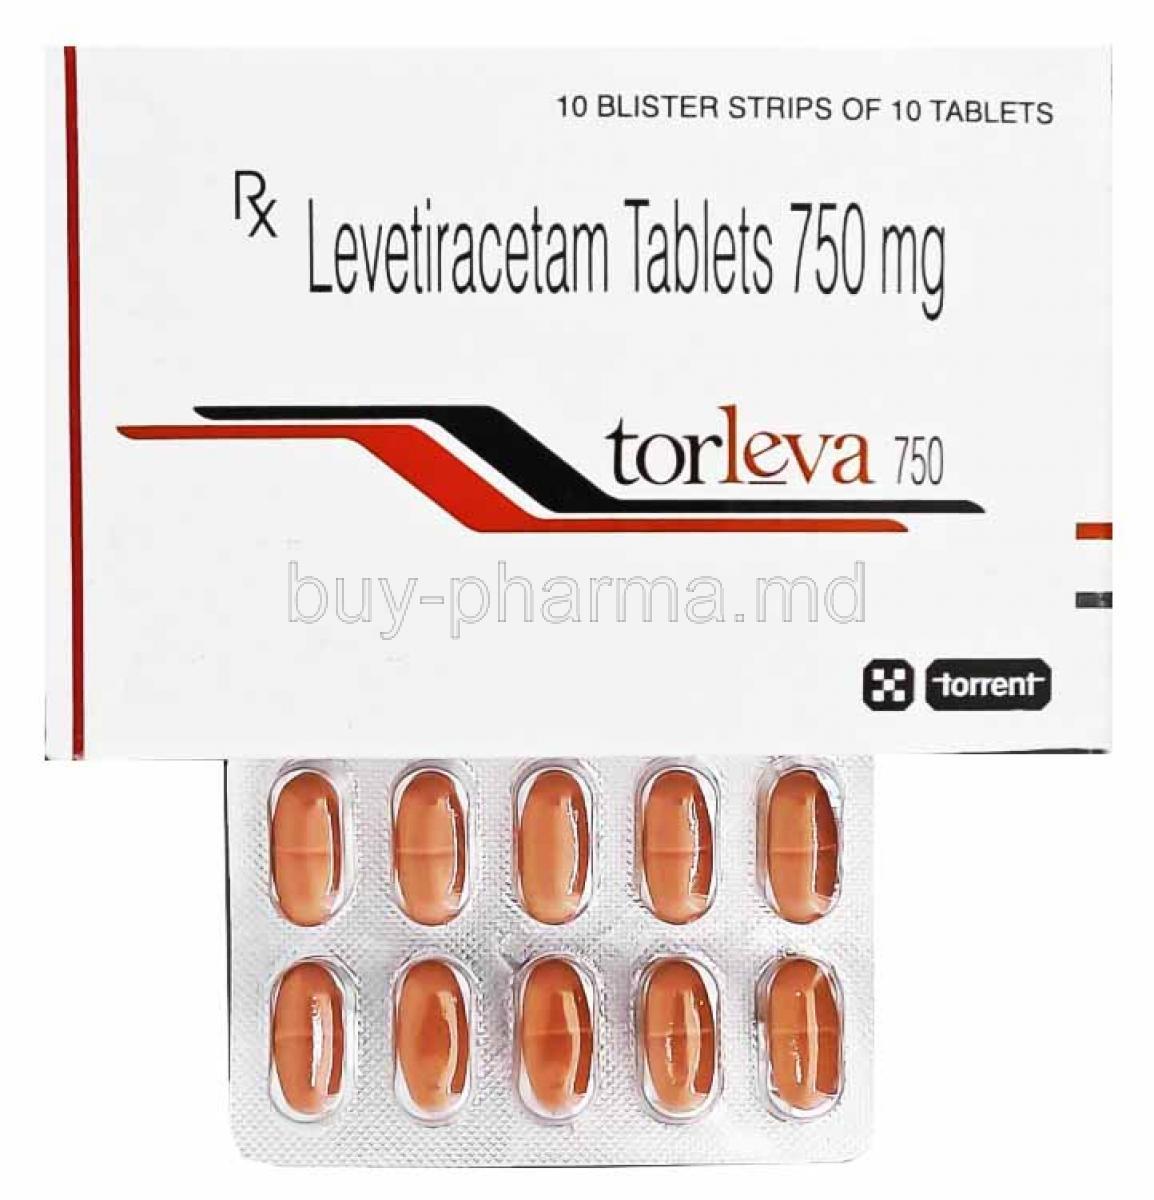 Torleva, Levetiracetam 750mg box and tablets